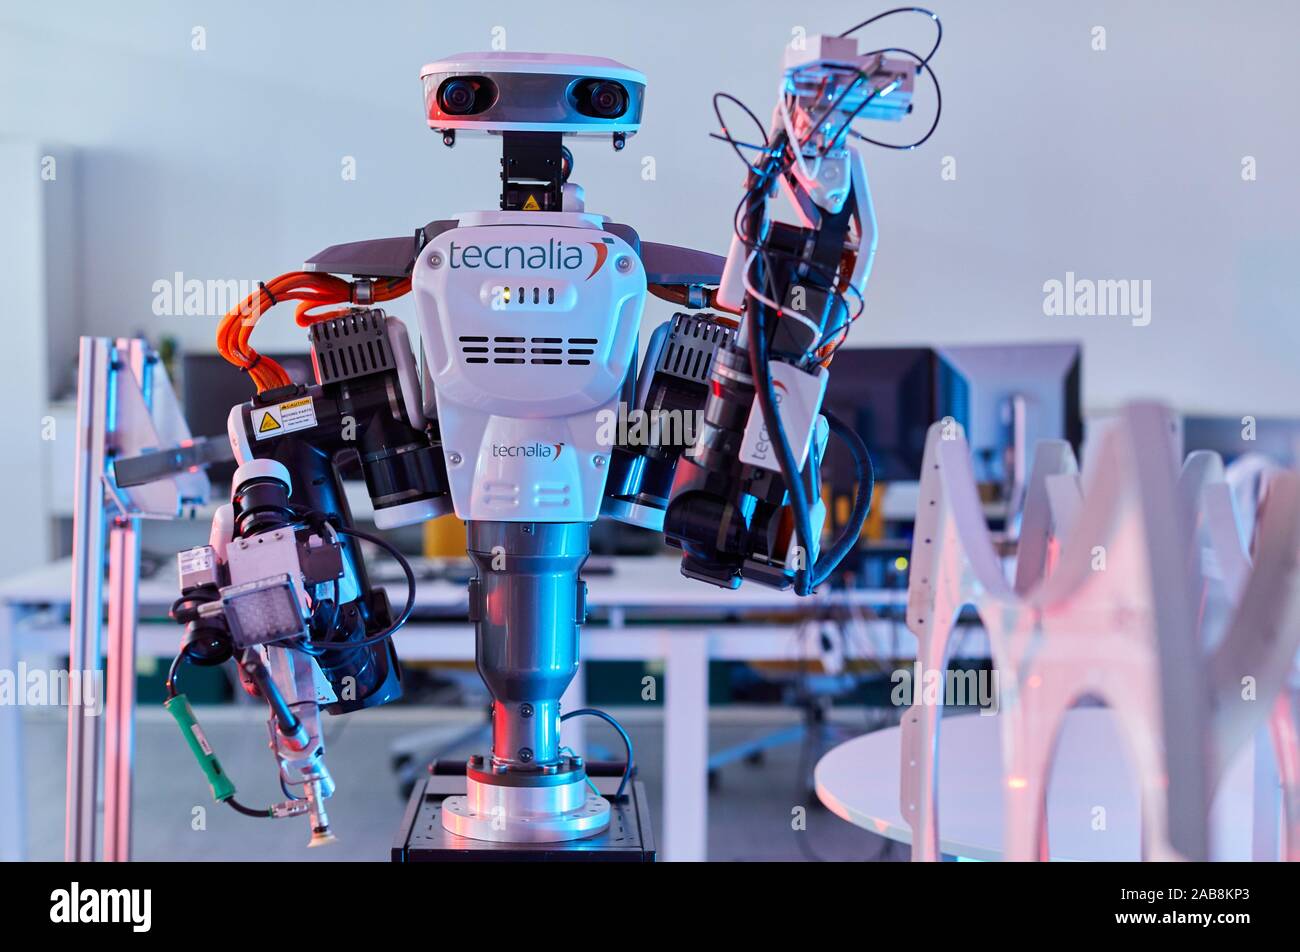 Roboter Autonomie für die flexible Fertigung, kollaborative Roboter-, Advanced Manufacturing Unit, Technology Center, Tecnalia Forschung & Innovation, Stockfoto